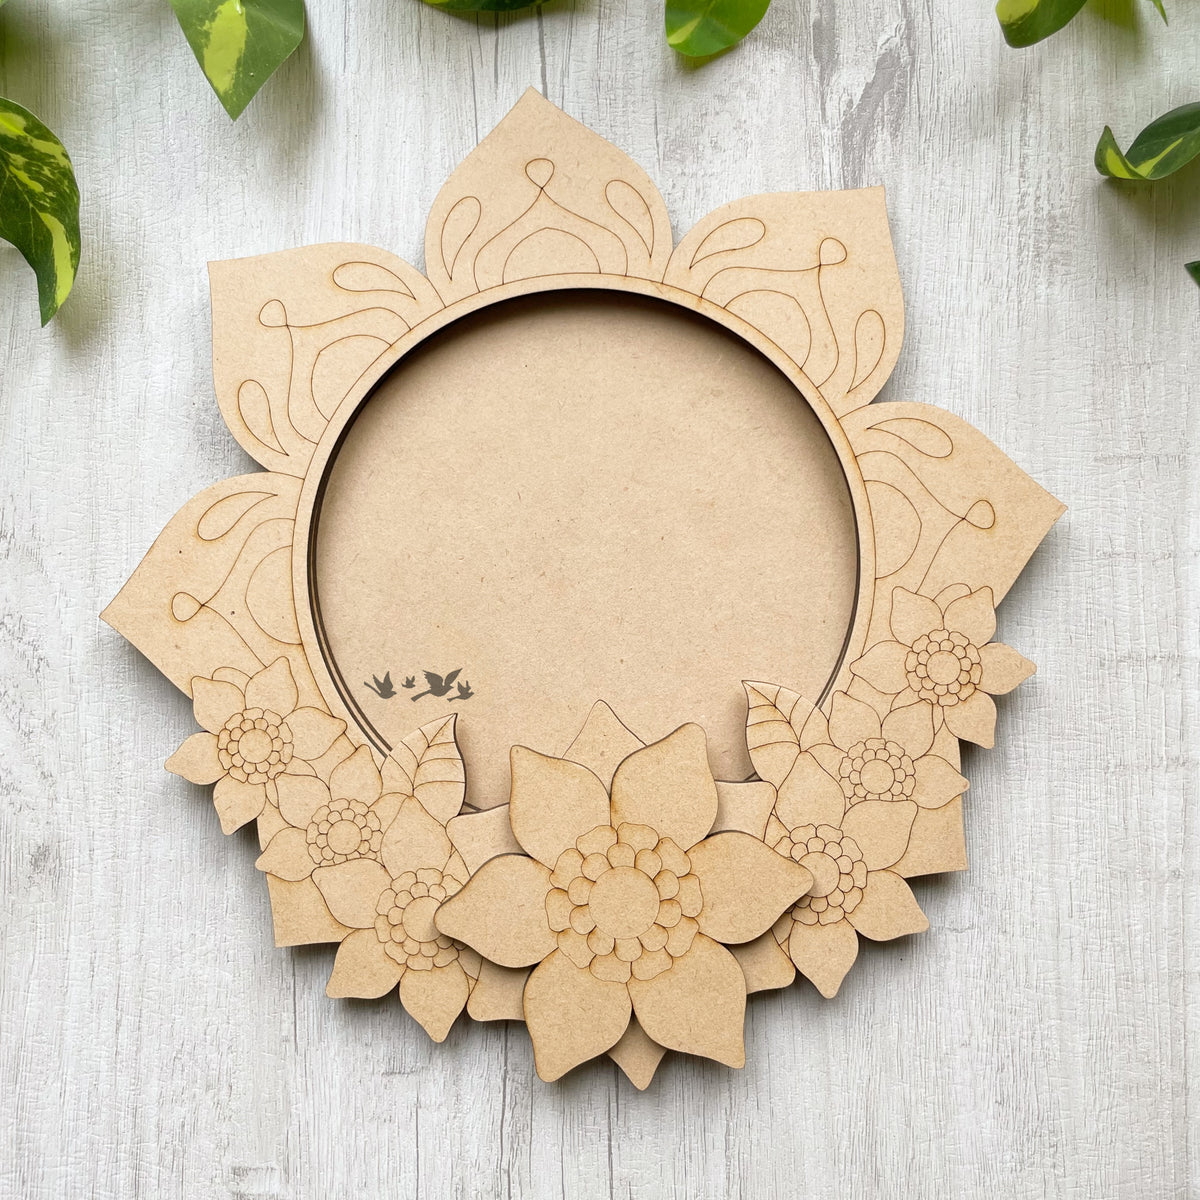 Pooja Thali/Platter - 3D floral